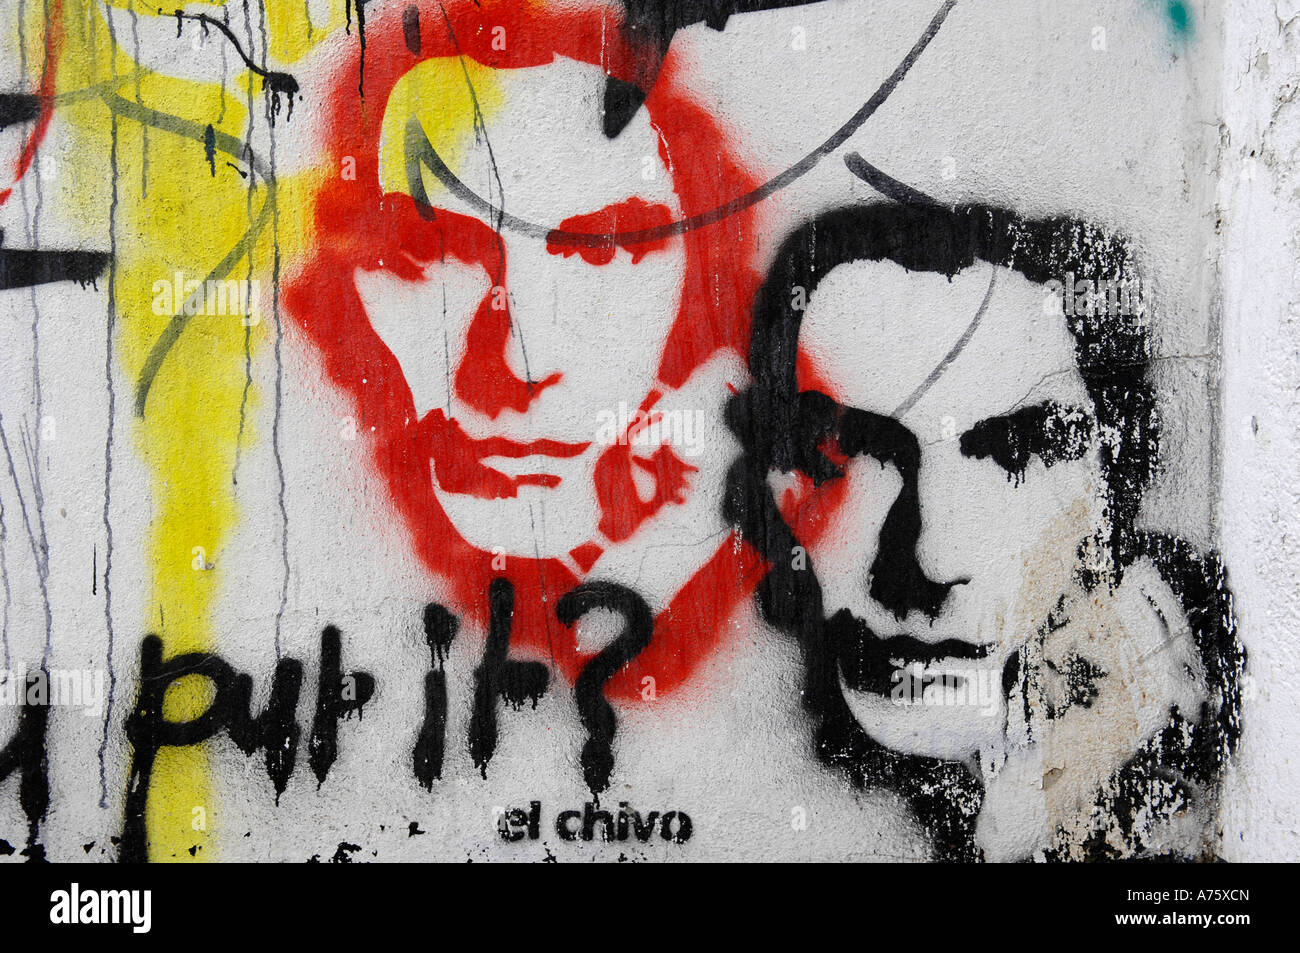 El Chivo Graffiti Art Banksy Style Stock Photo